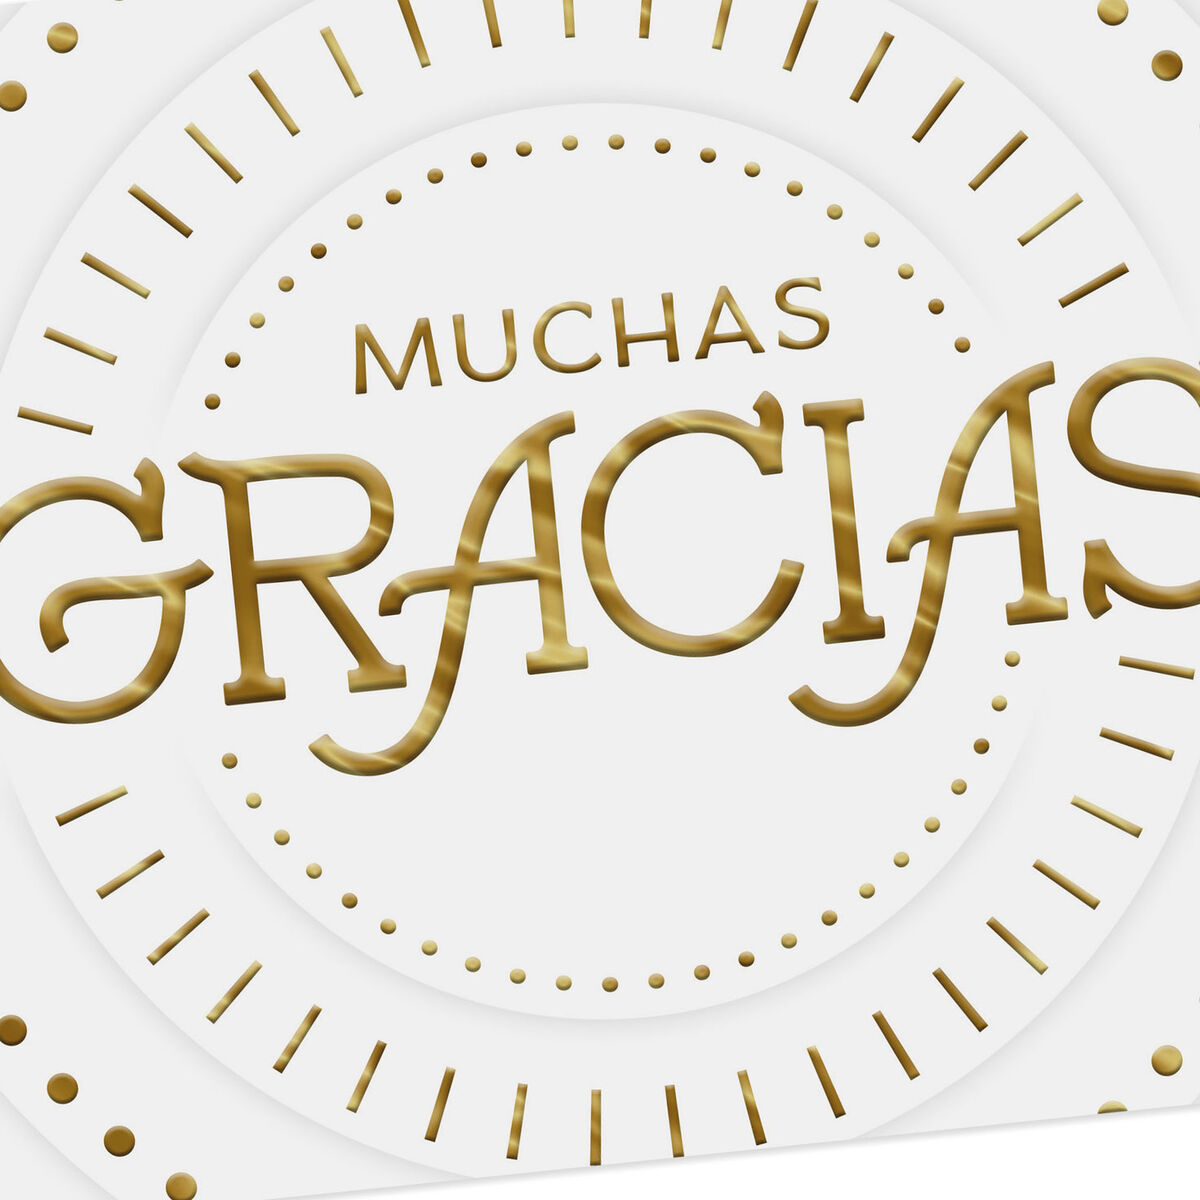 Muchas Gracias Spanish-Language Thank You Card - Greeting Cards - Hallmark